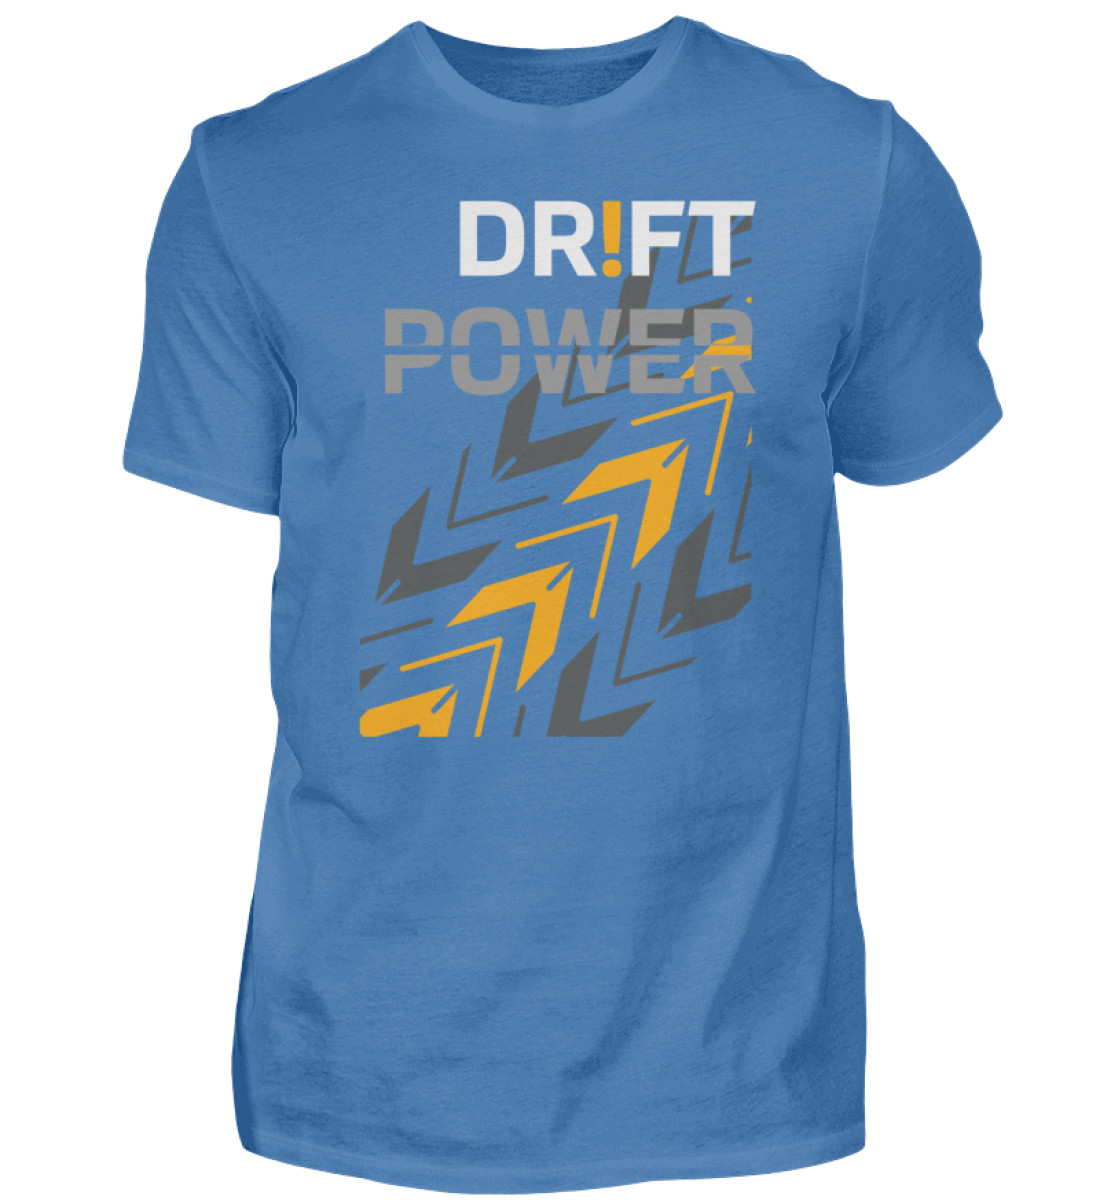 Drift Power - Herren Premiumshirt-2894